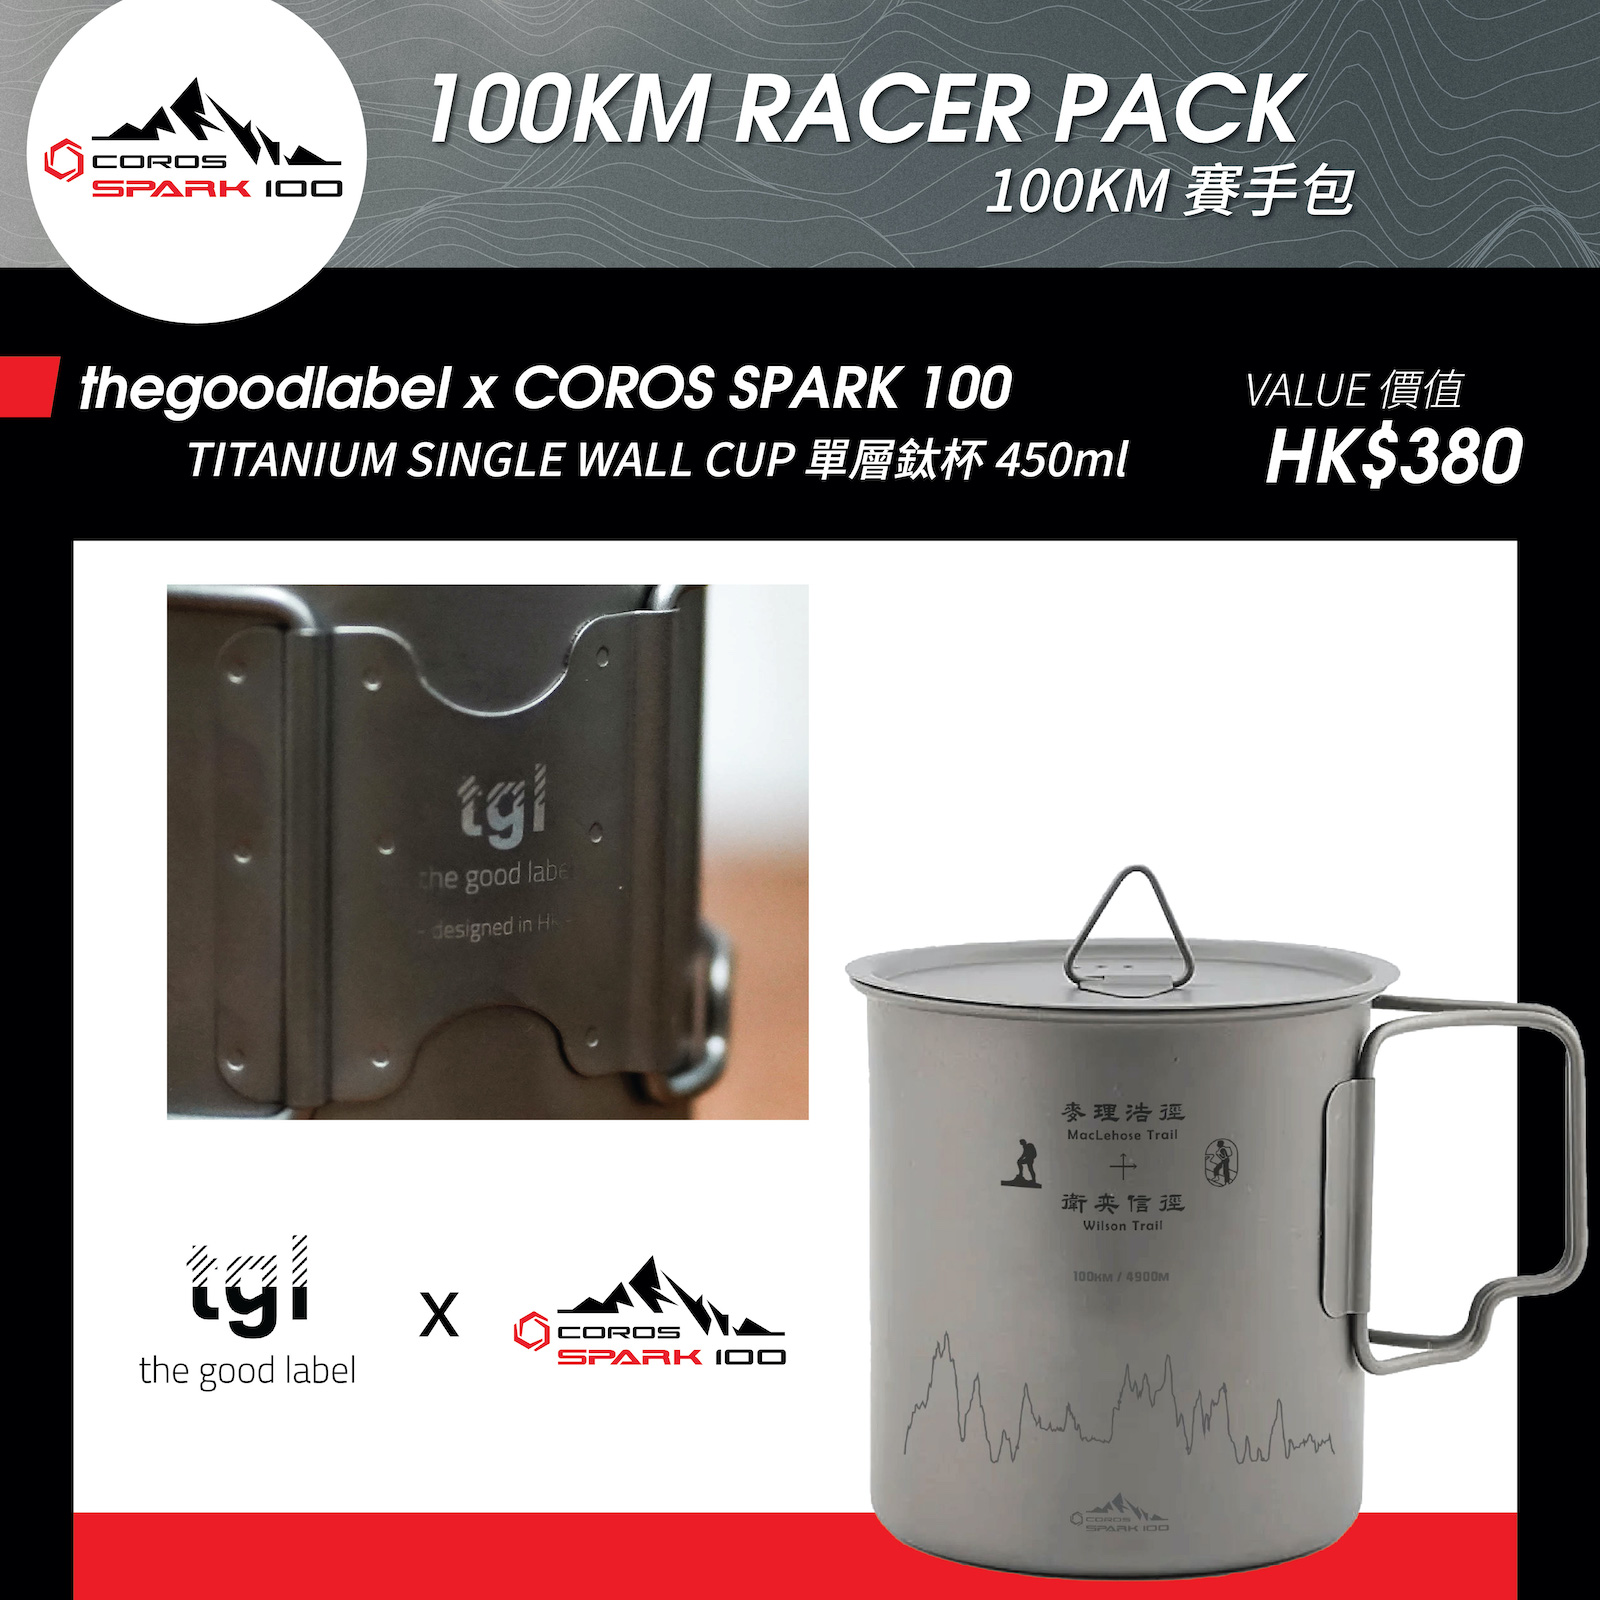 thegoodlabel x COROS SPARK 100 Titanium Single Wall Cup 450ml (Value: HK$380)